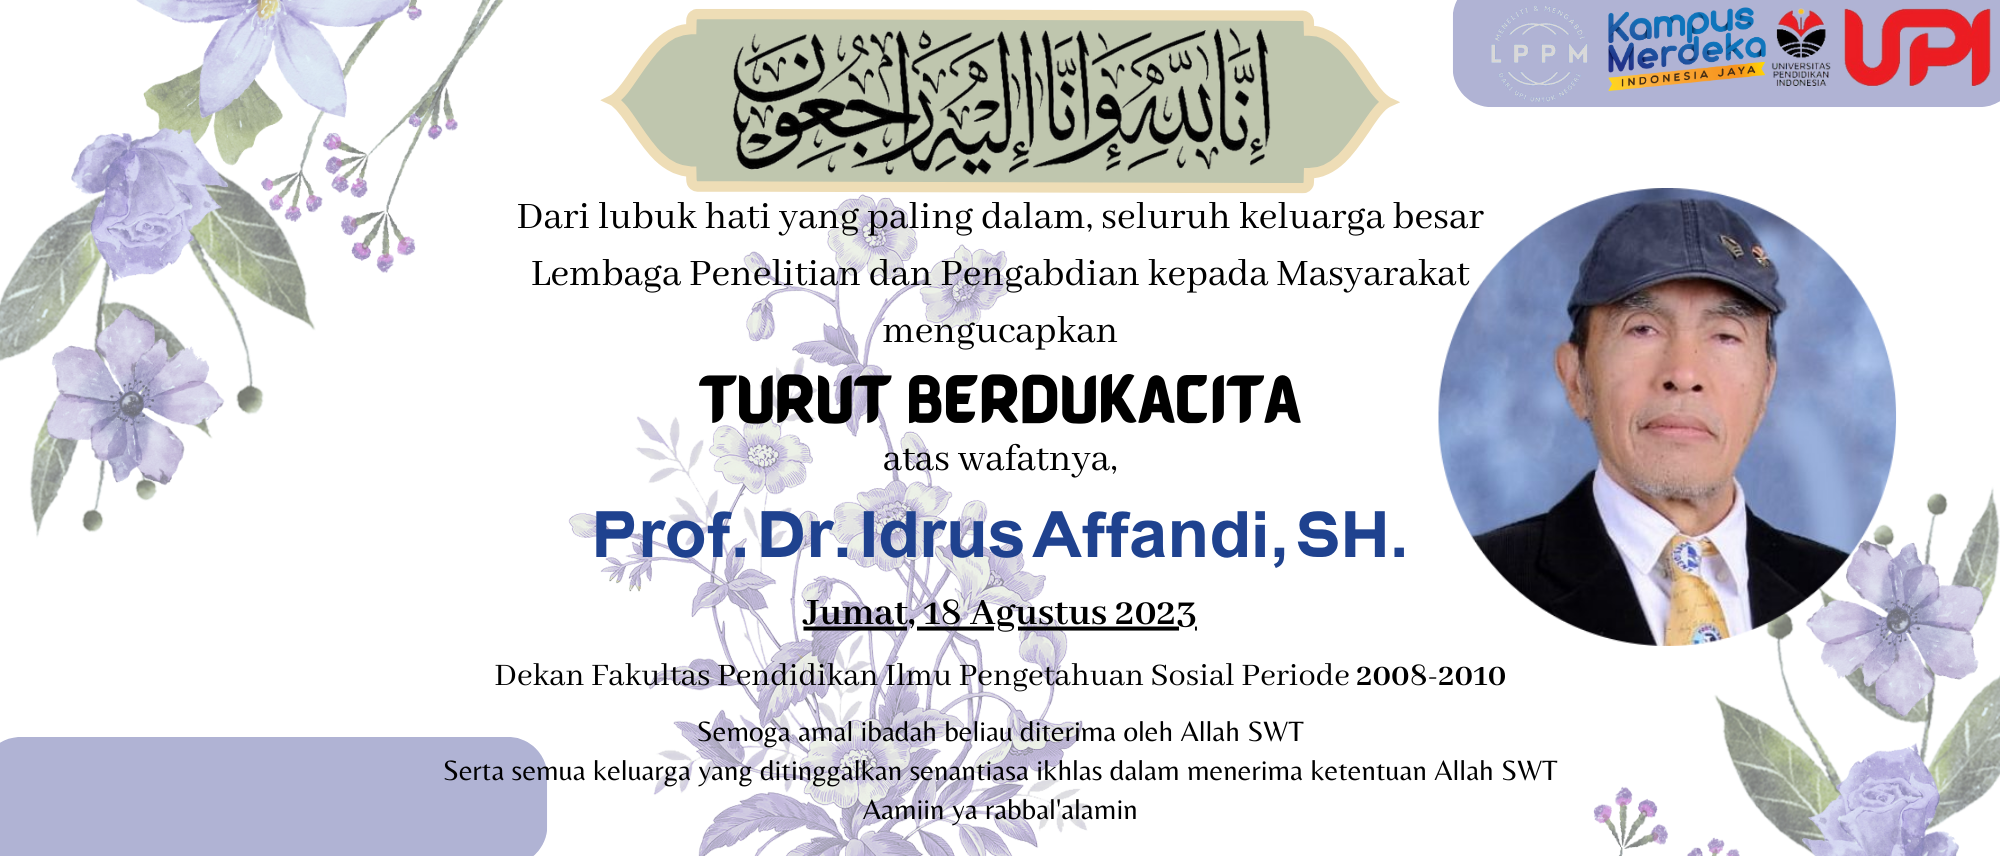 Berita Duka Prof. Dr. Idrus Affandi, SH.